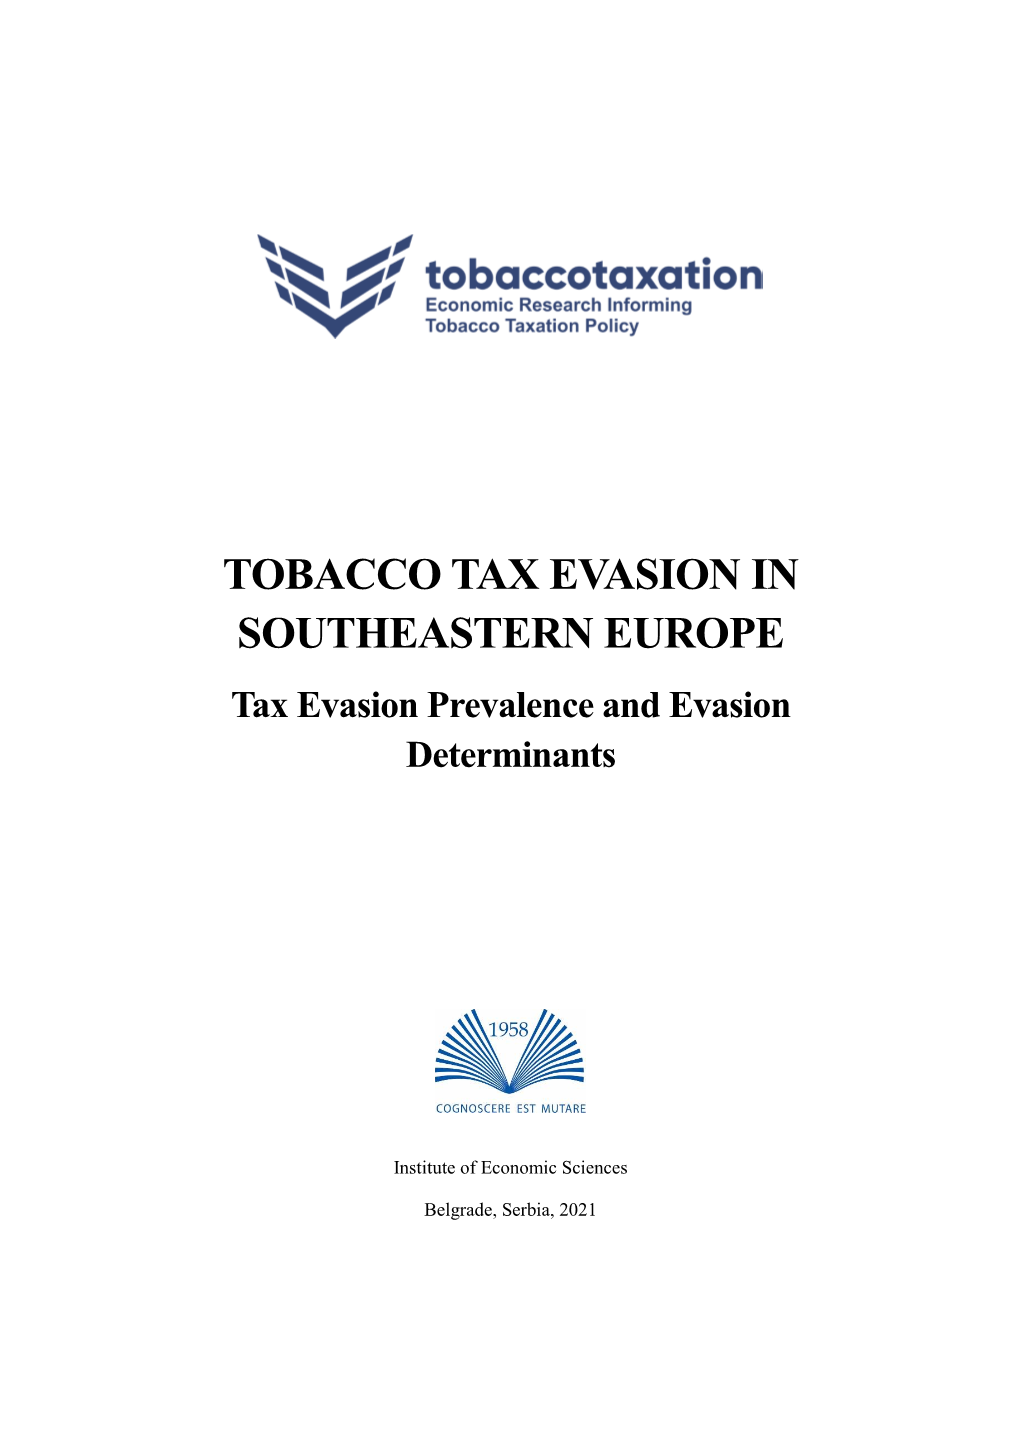 TOBACCO TAX EVASION in SOUTHEASTERN EUROPE Tax Evasion Prevalence and Evasion Determinants